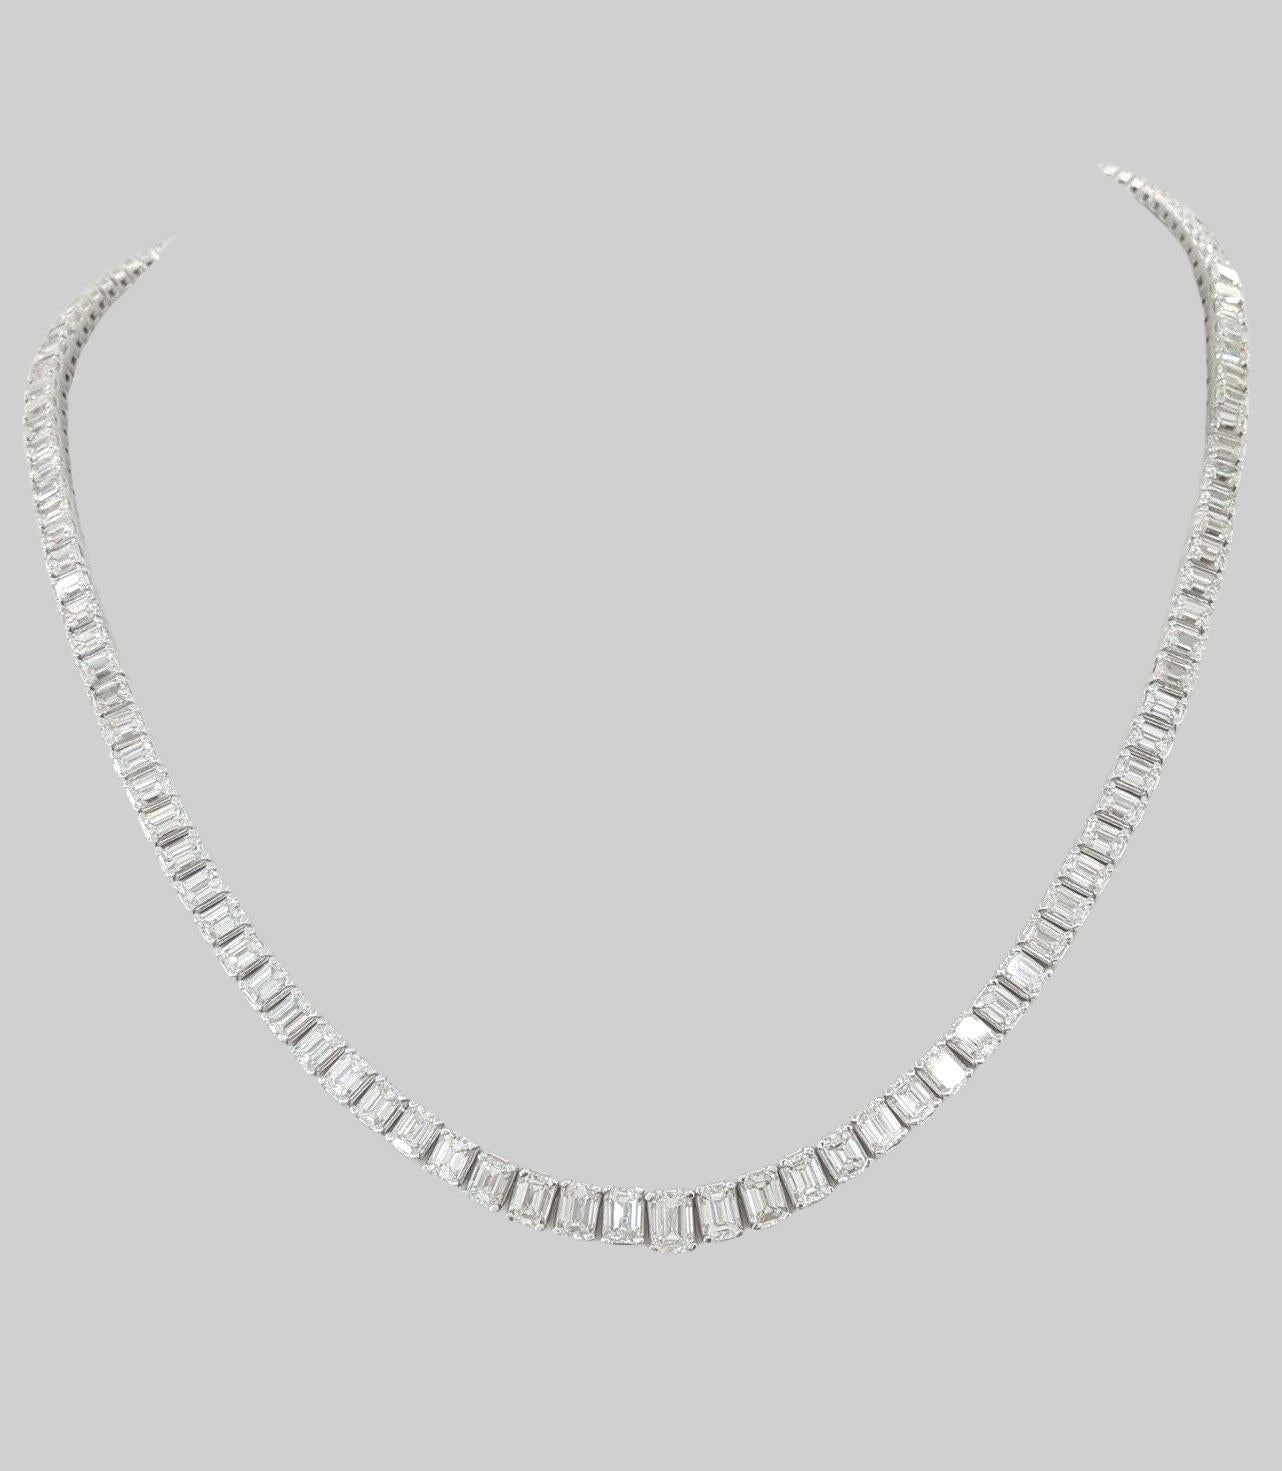 White Gold 16 carat Emerald Cut Diamond Riviera Diamond Line Necklace 16